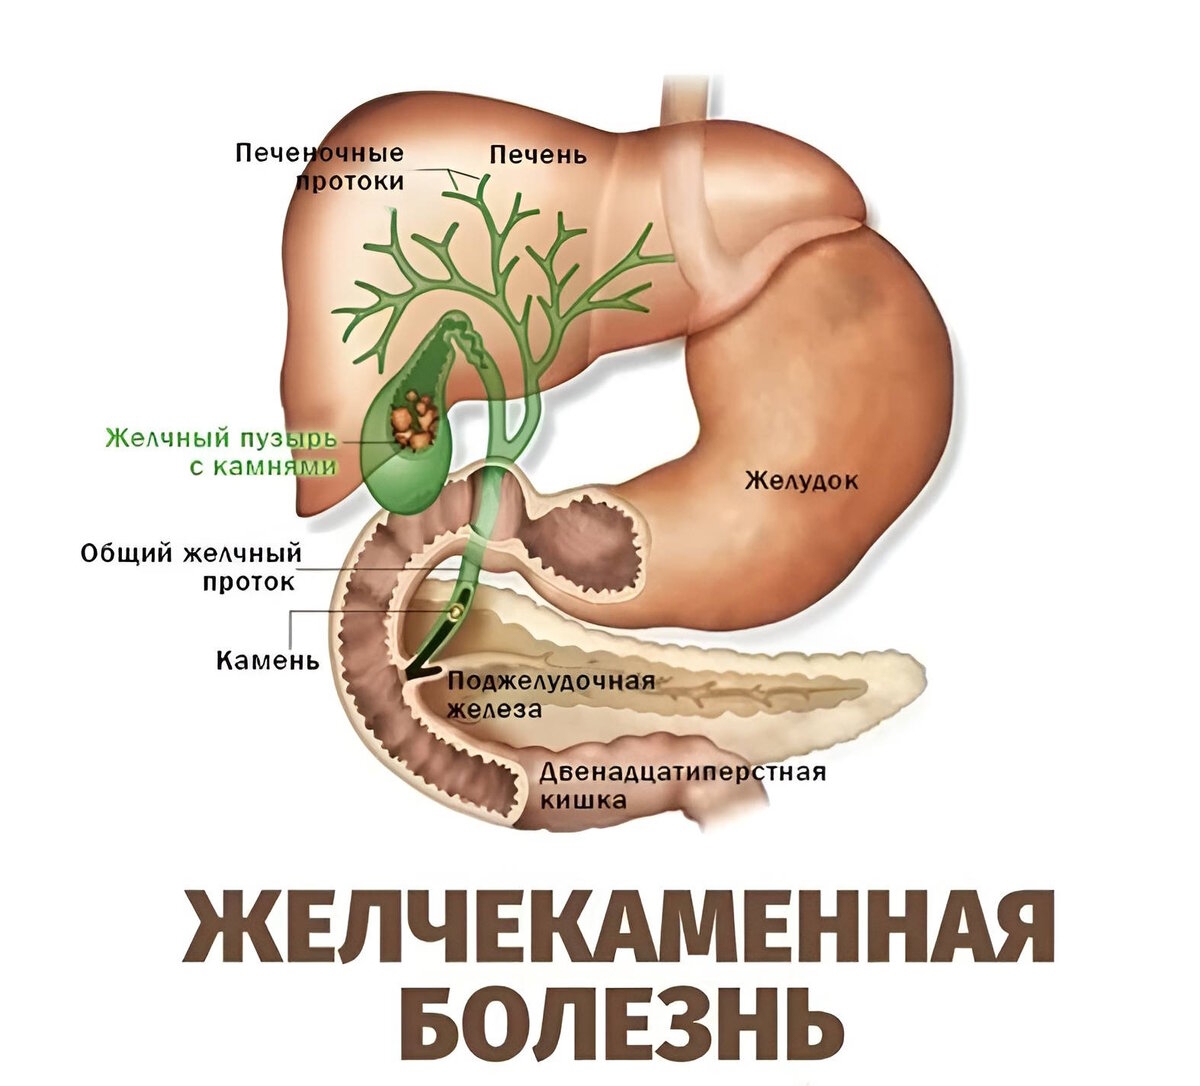 Центр желчного пузыря. Анатомия ЖКТ желчный пузырь. Желчный пузырь и желчные протоки анатомия. Камни поджелудочной железы ЖКБ. Желчекаменная болезнь анатомия.